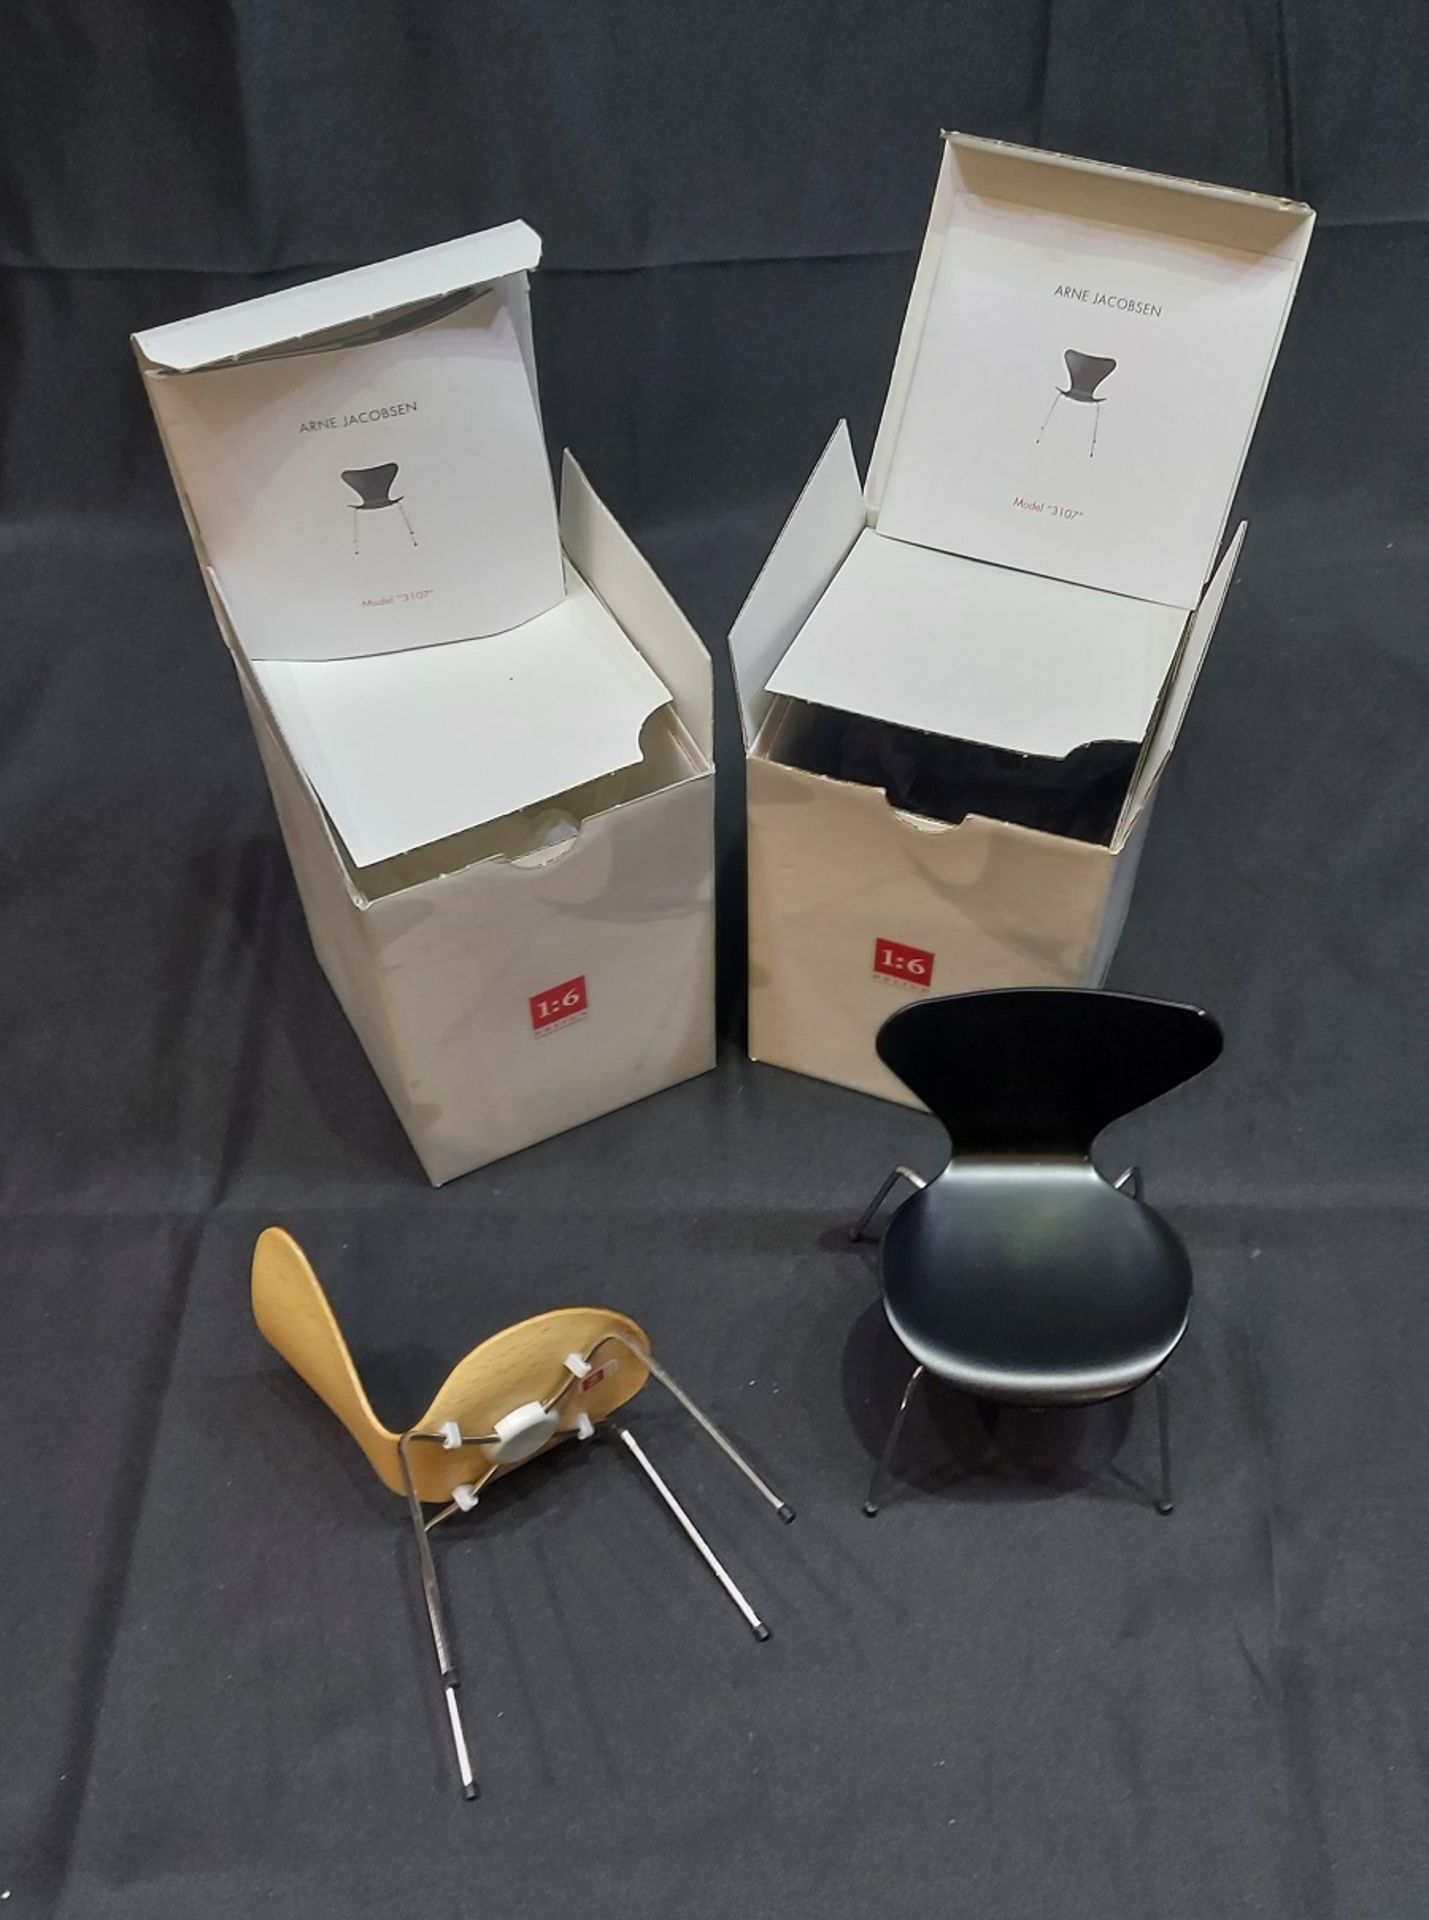 Sammlerstücke! 2 Stk. Arne Jacobsen Museum Miniatur Stuhl Kollektion 1x buche 1x schwarz - Bild 2 aus 11